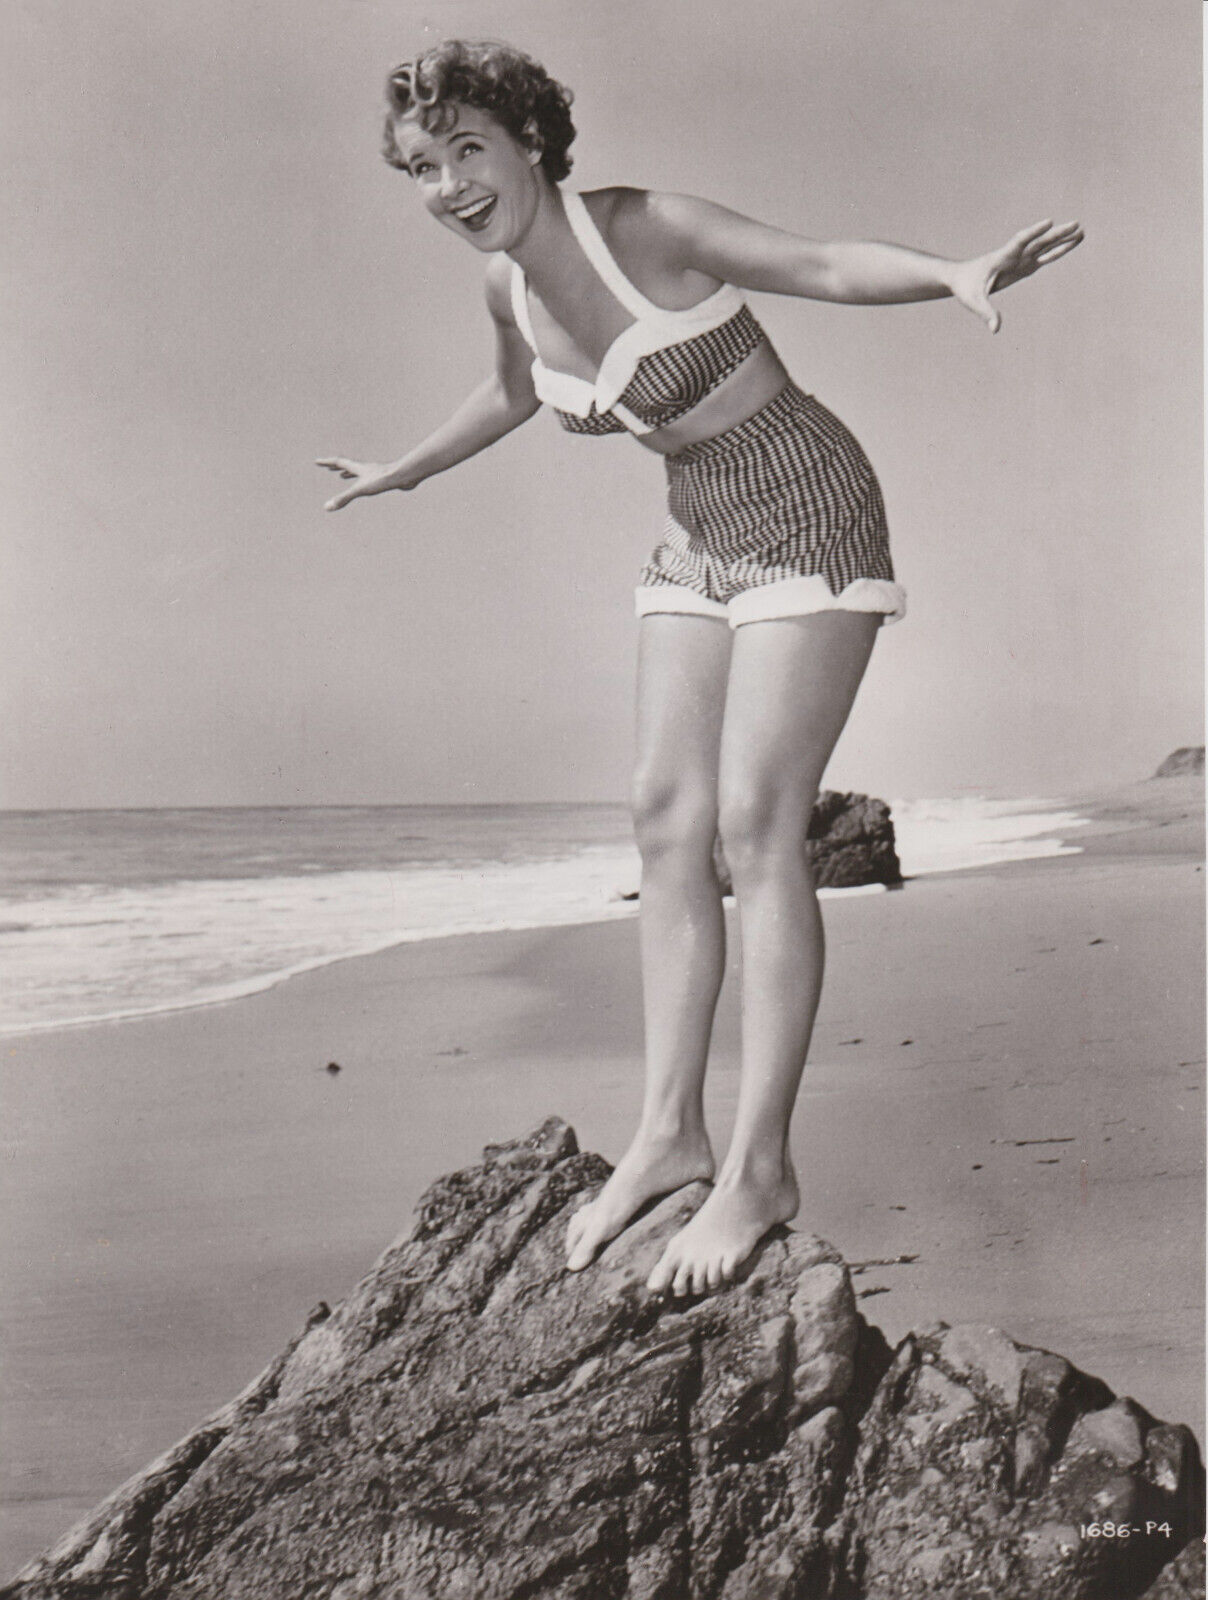 1952 Press Photo Actress Mona Freeman Models Bathing Suit on California Beach